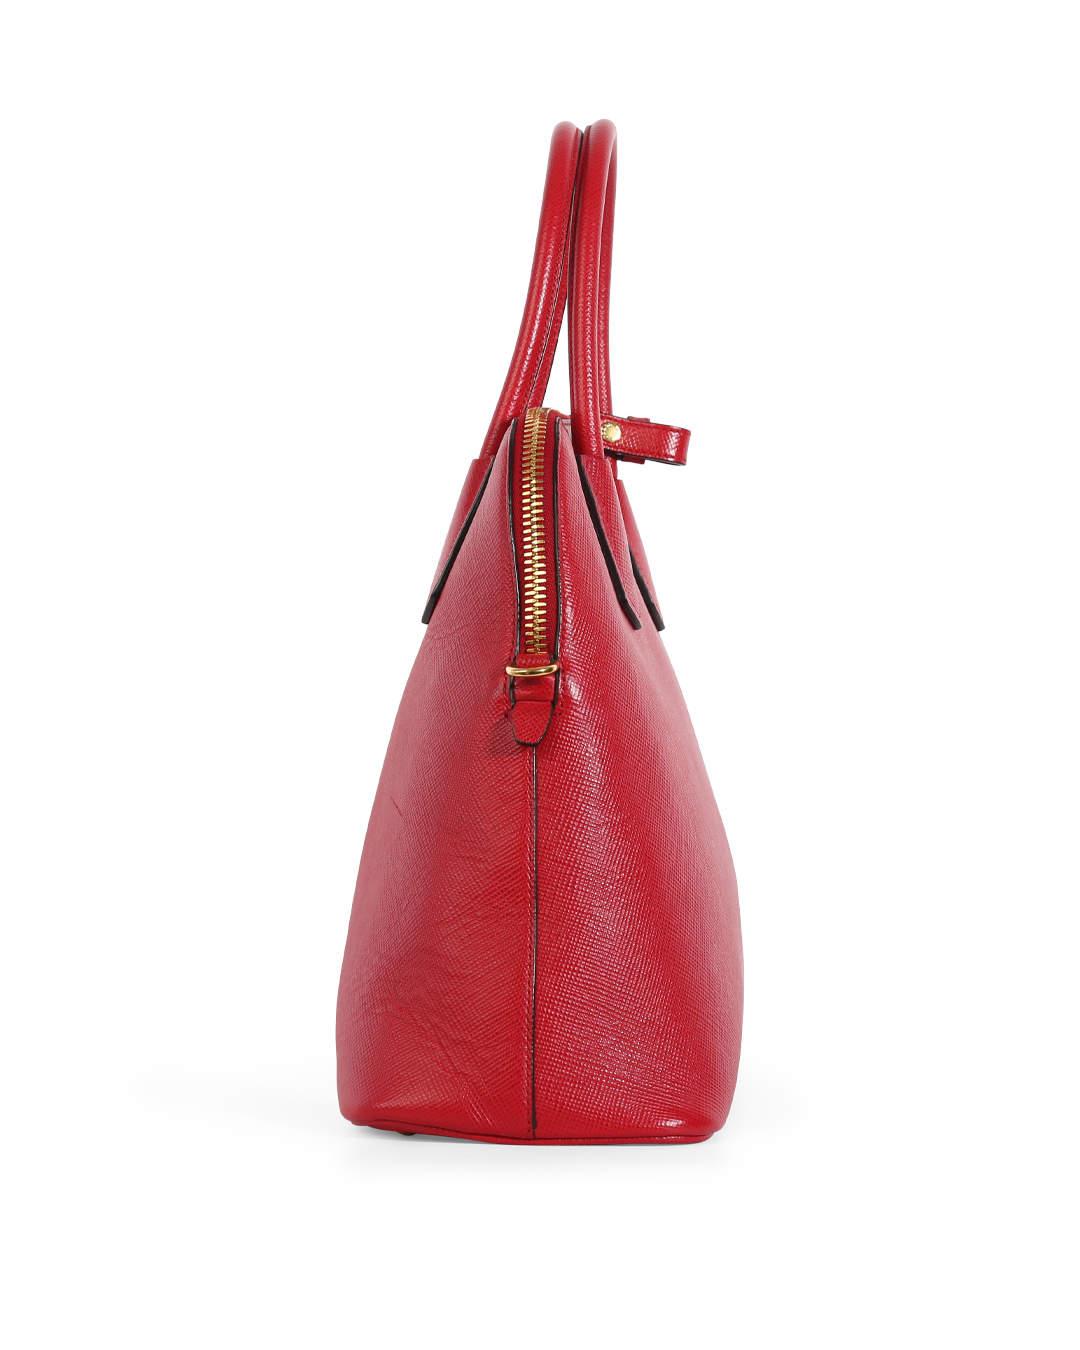 Prada Red Saffiano Leather Medium Dome Satchel Bag In Excellent Condition For Sale In Dubai, Al Qouz 2